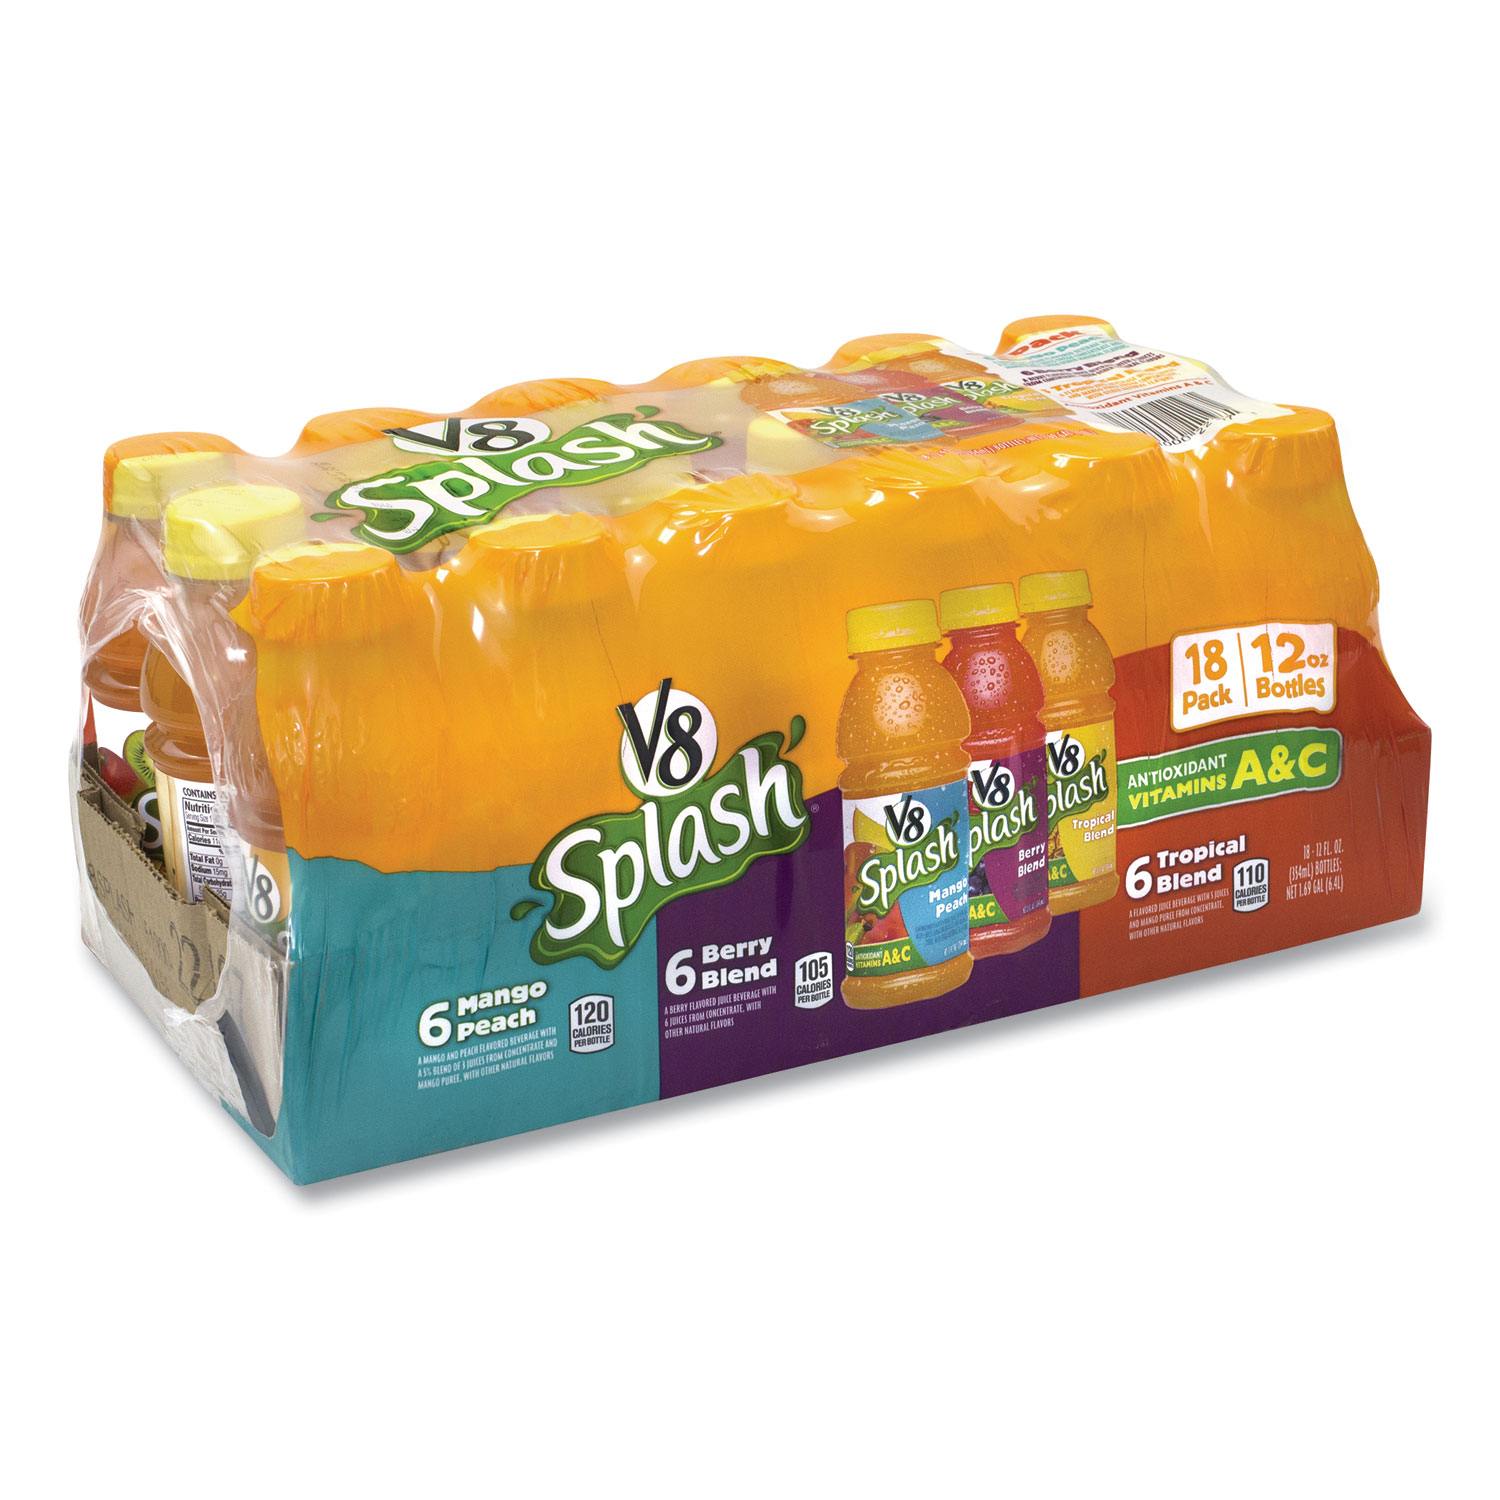  V-8 22197 V-8 Splash Variety, Berry Blend; Mango Peach; Tropical Blend  12 oz Bottle, 18/Pack, Free Delivery in 1-4 Business Days (GRR90000054) 